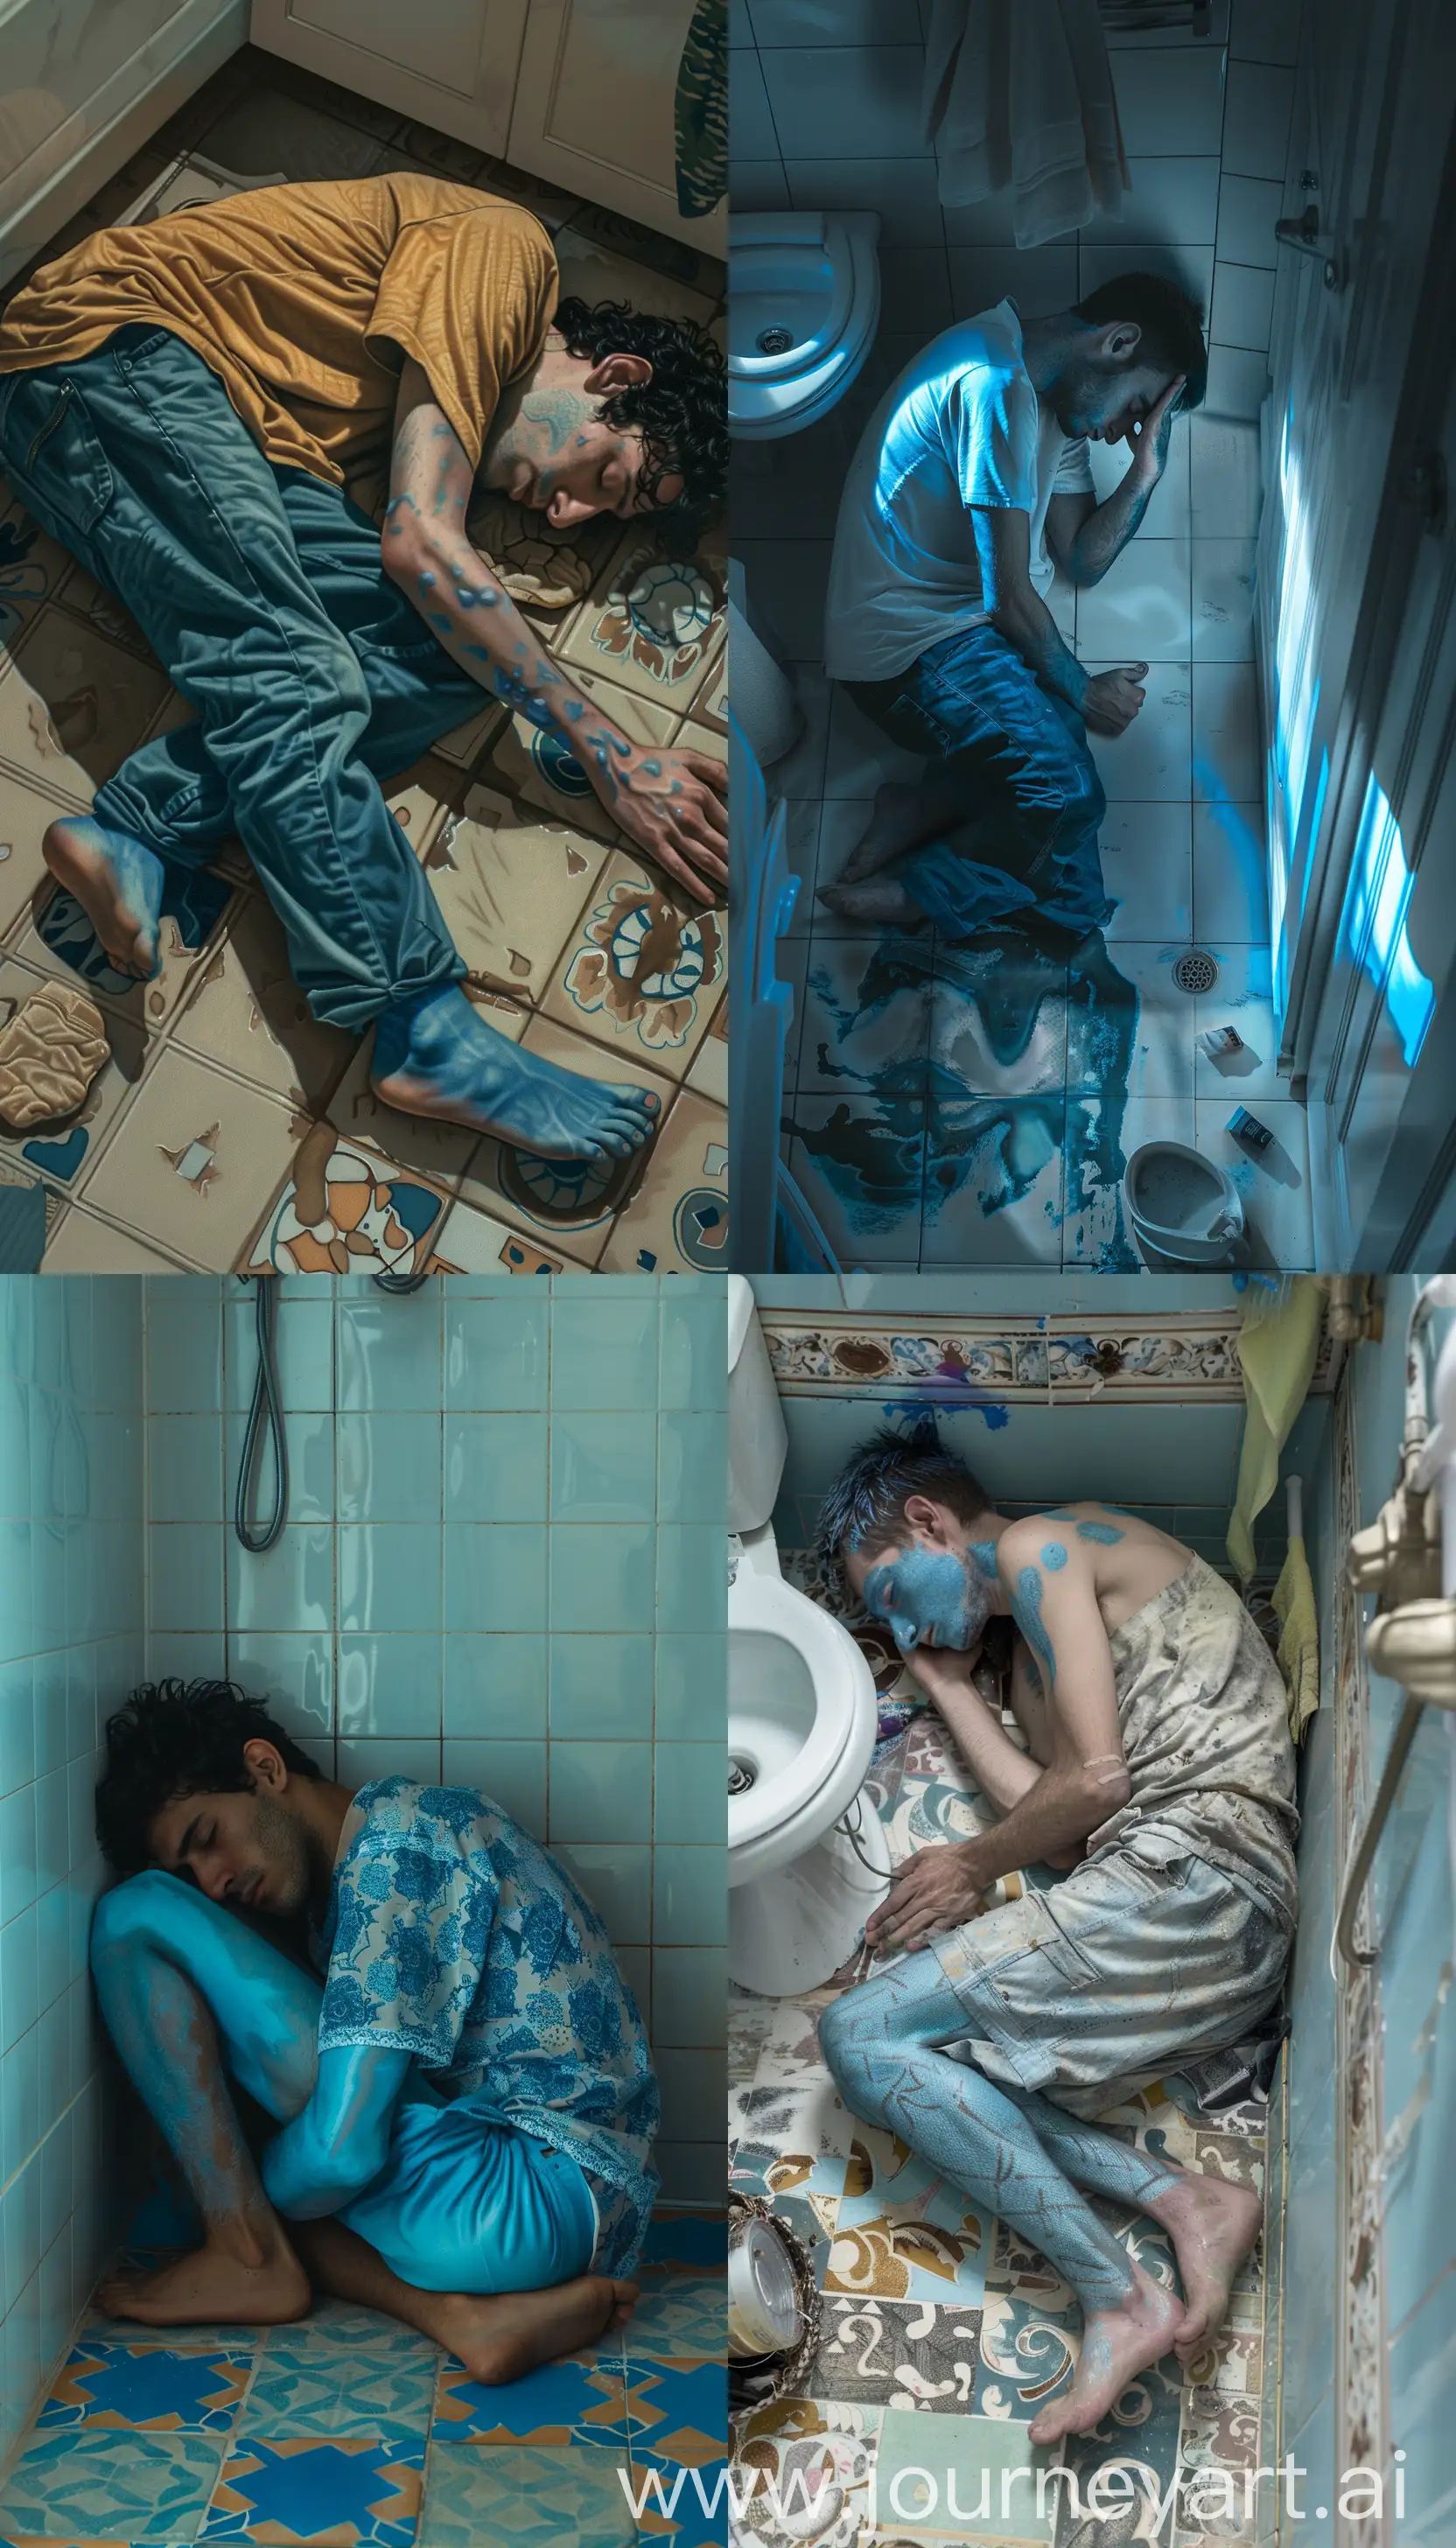 A high-angle view of a man sleeping on the bathroom floor with blue skind --ar 4:7 --v 6